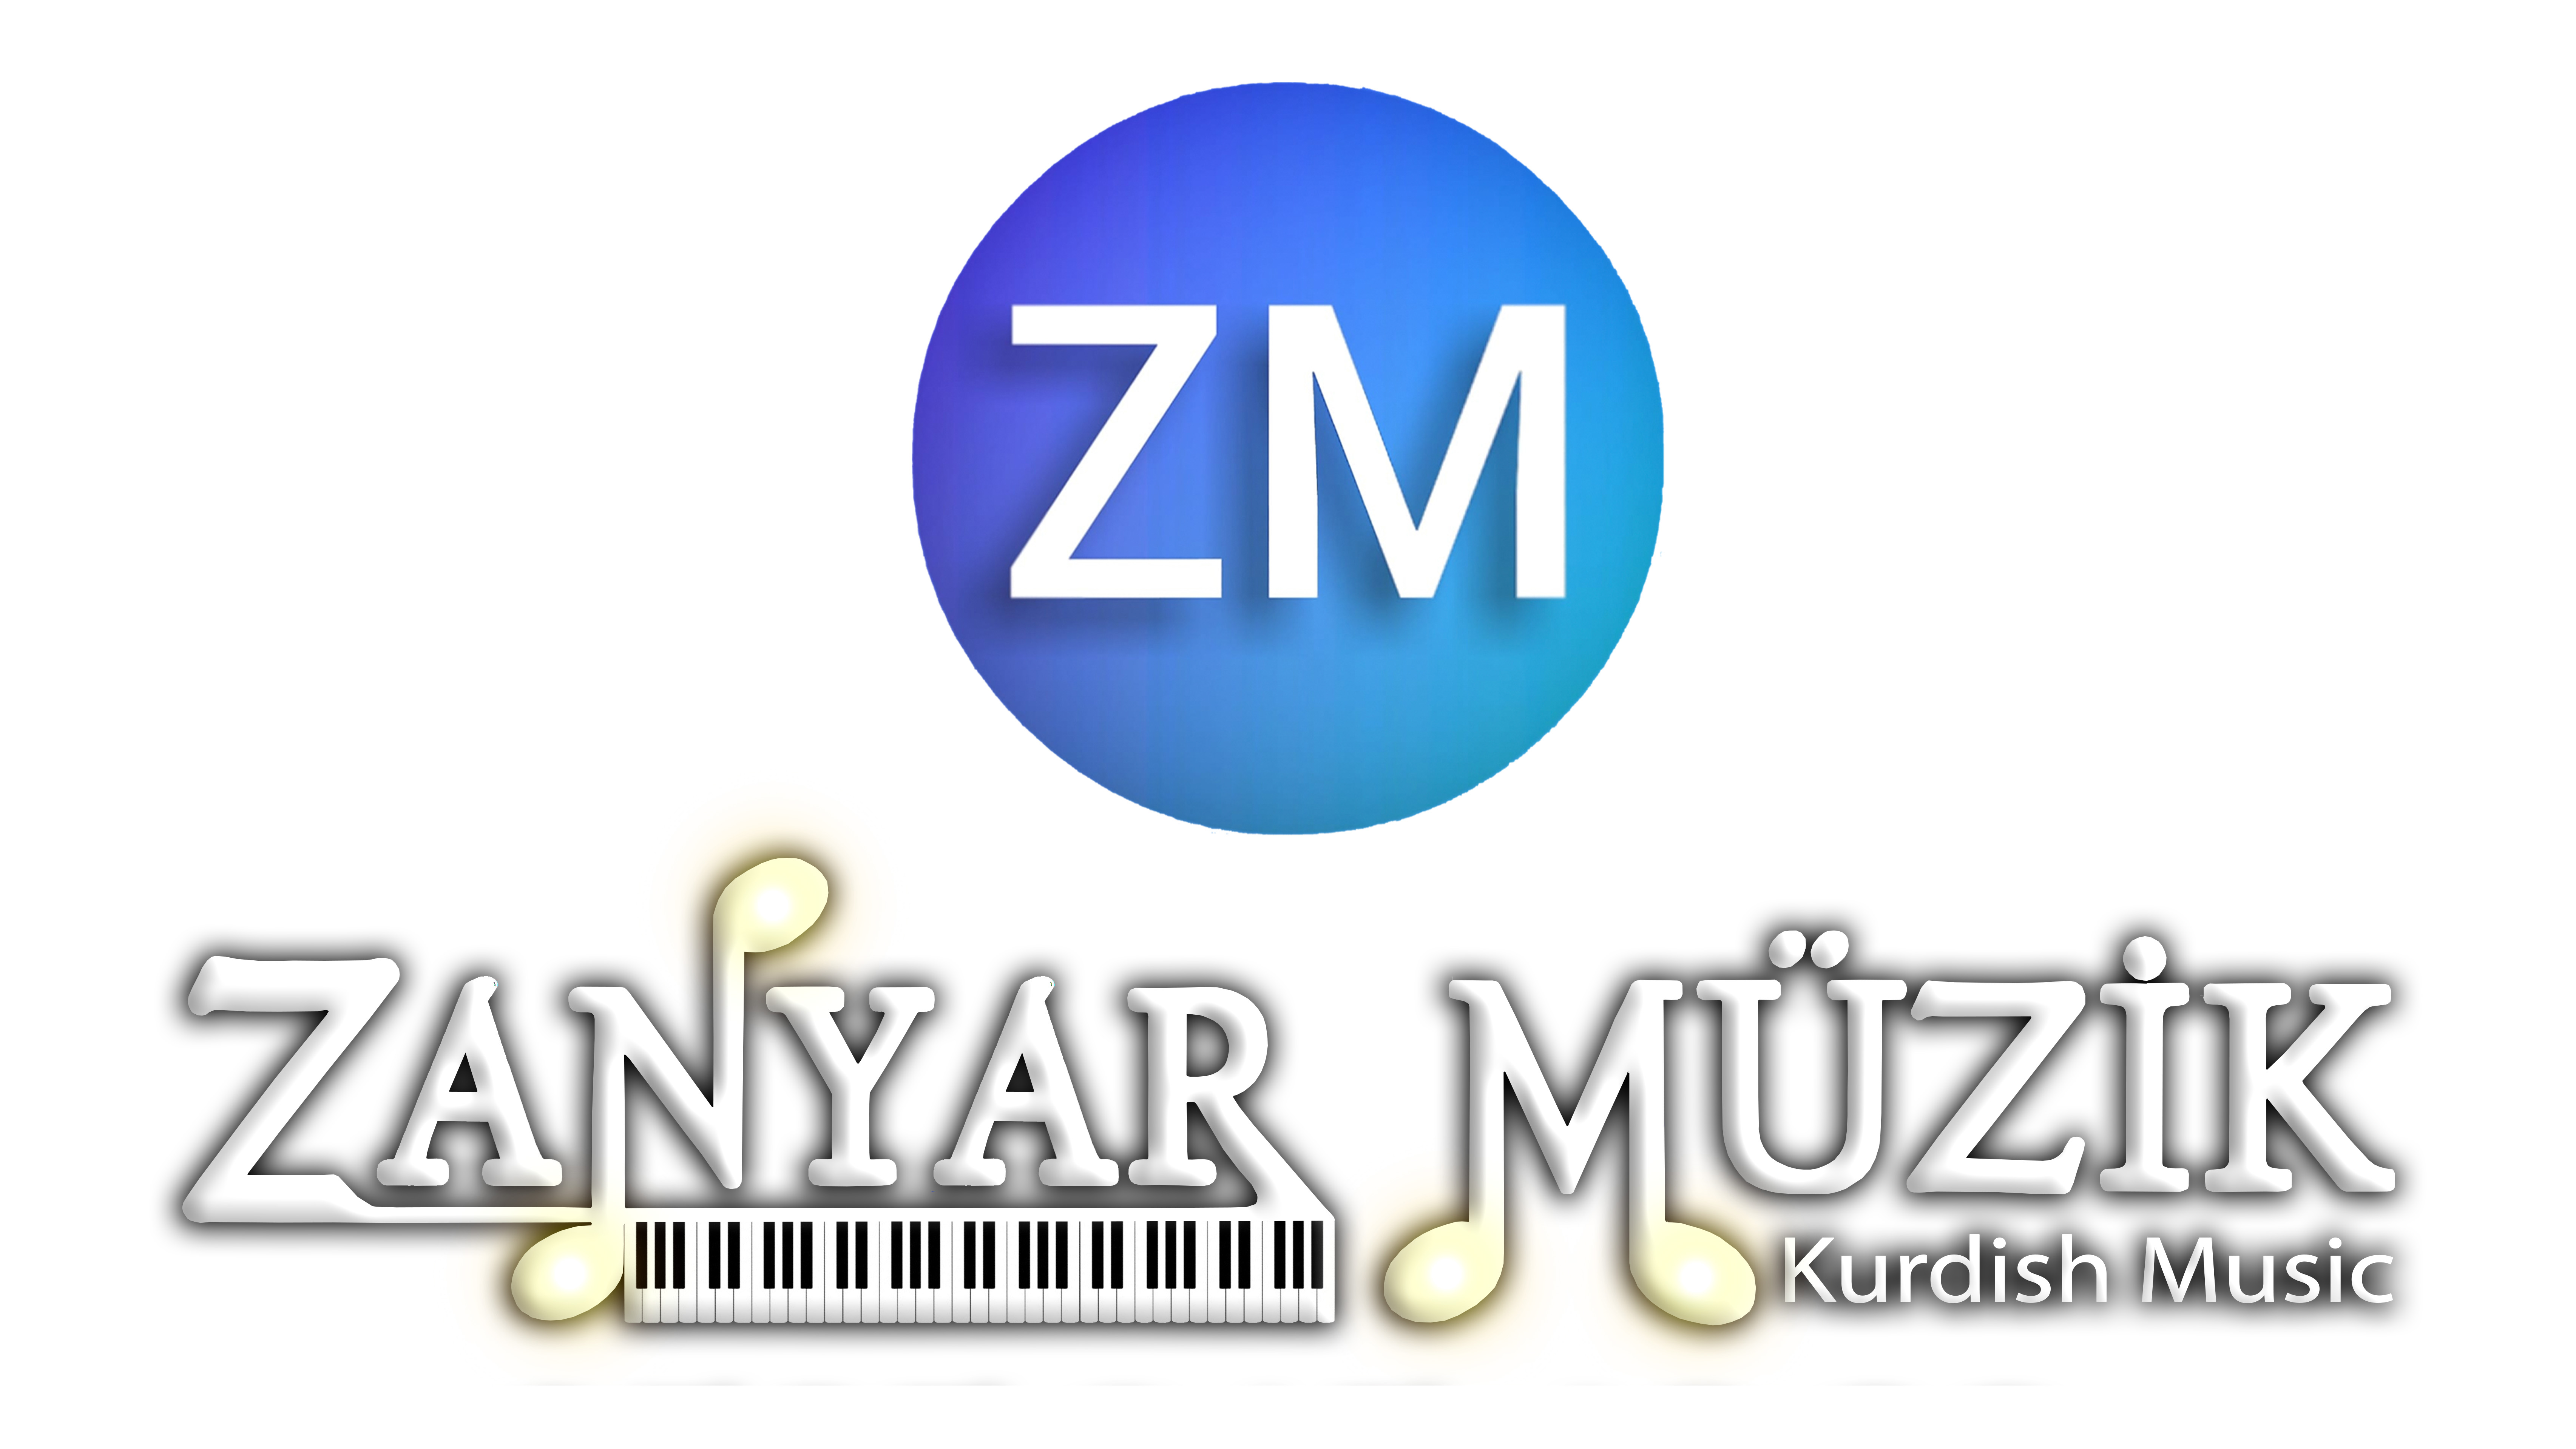 Zm logo monogram design template Royalty Free Vector Image